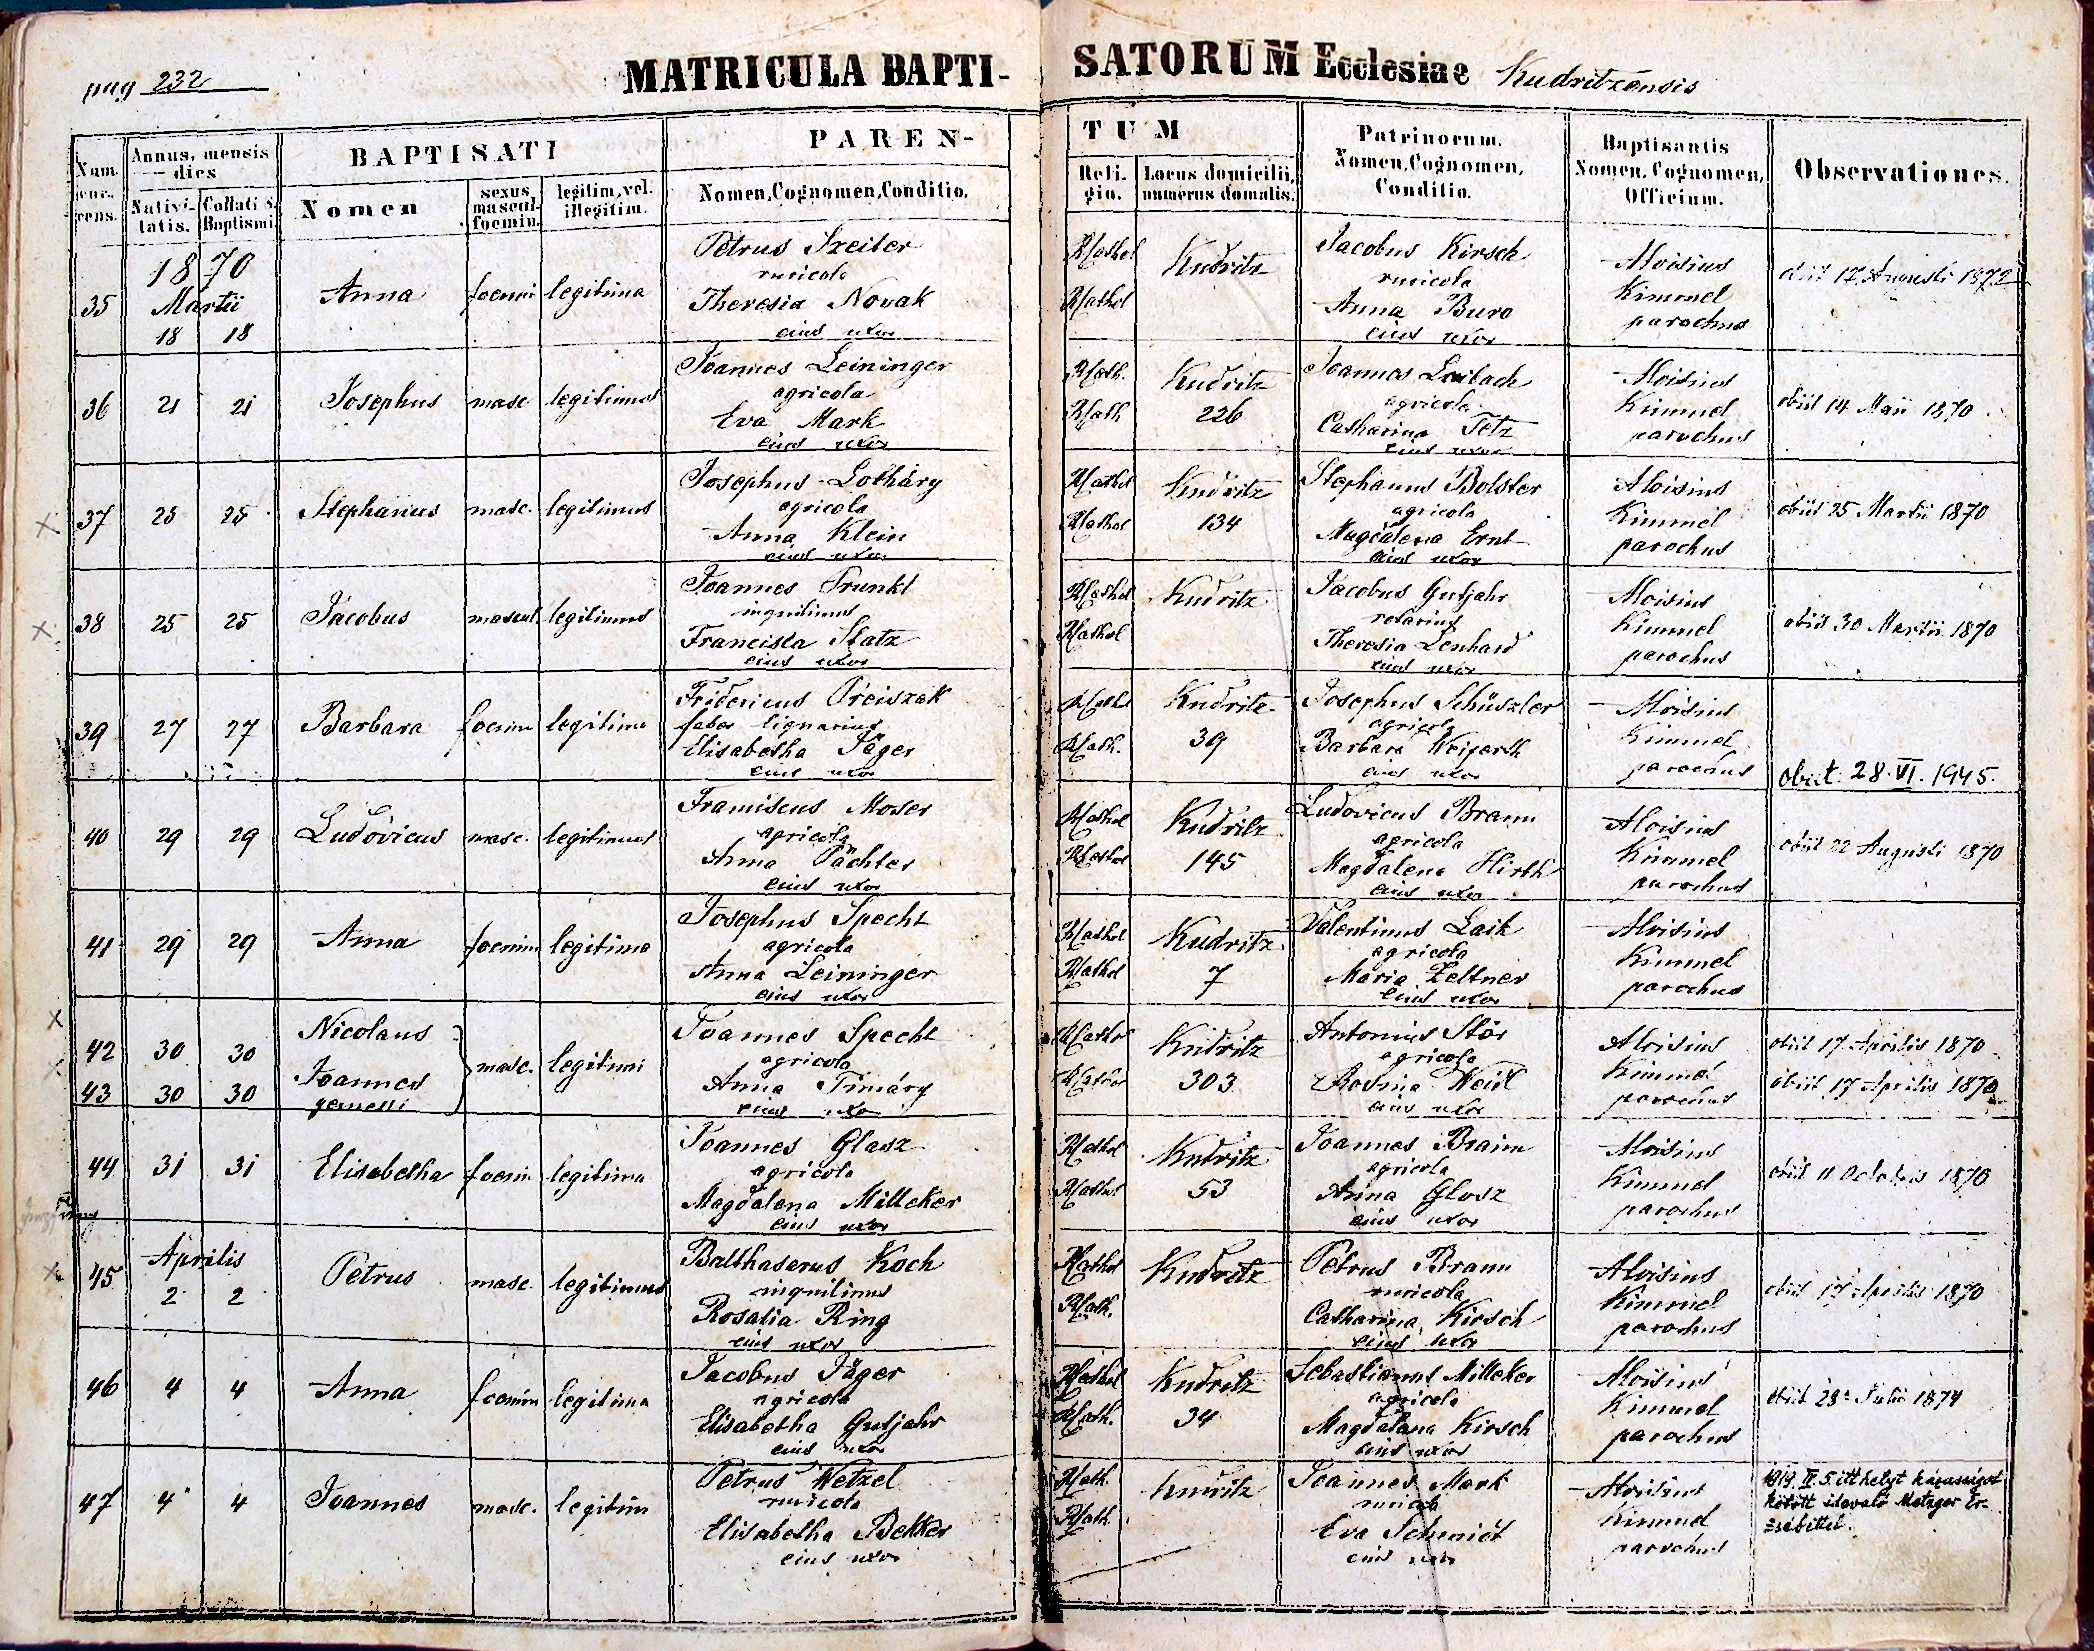 images/church_records/BIRTHS/1852-1870B/232